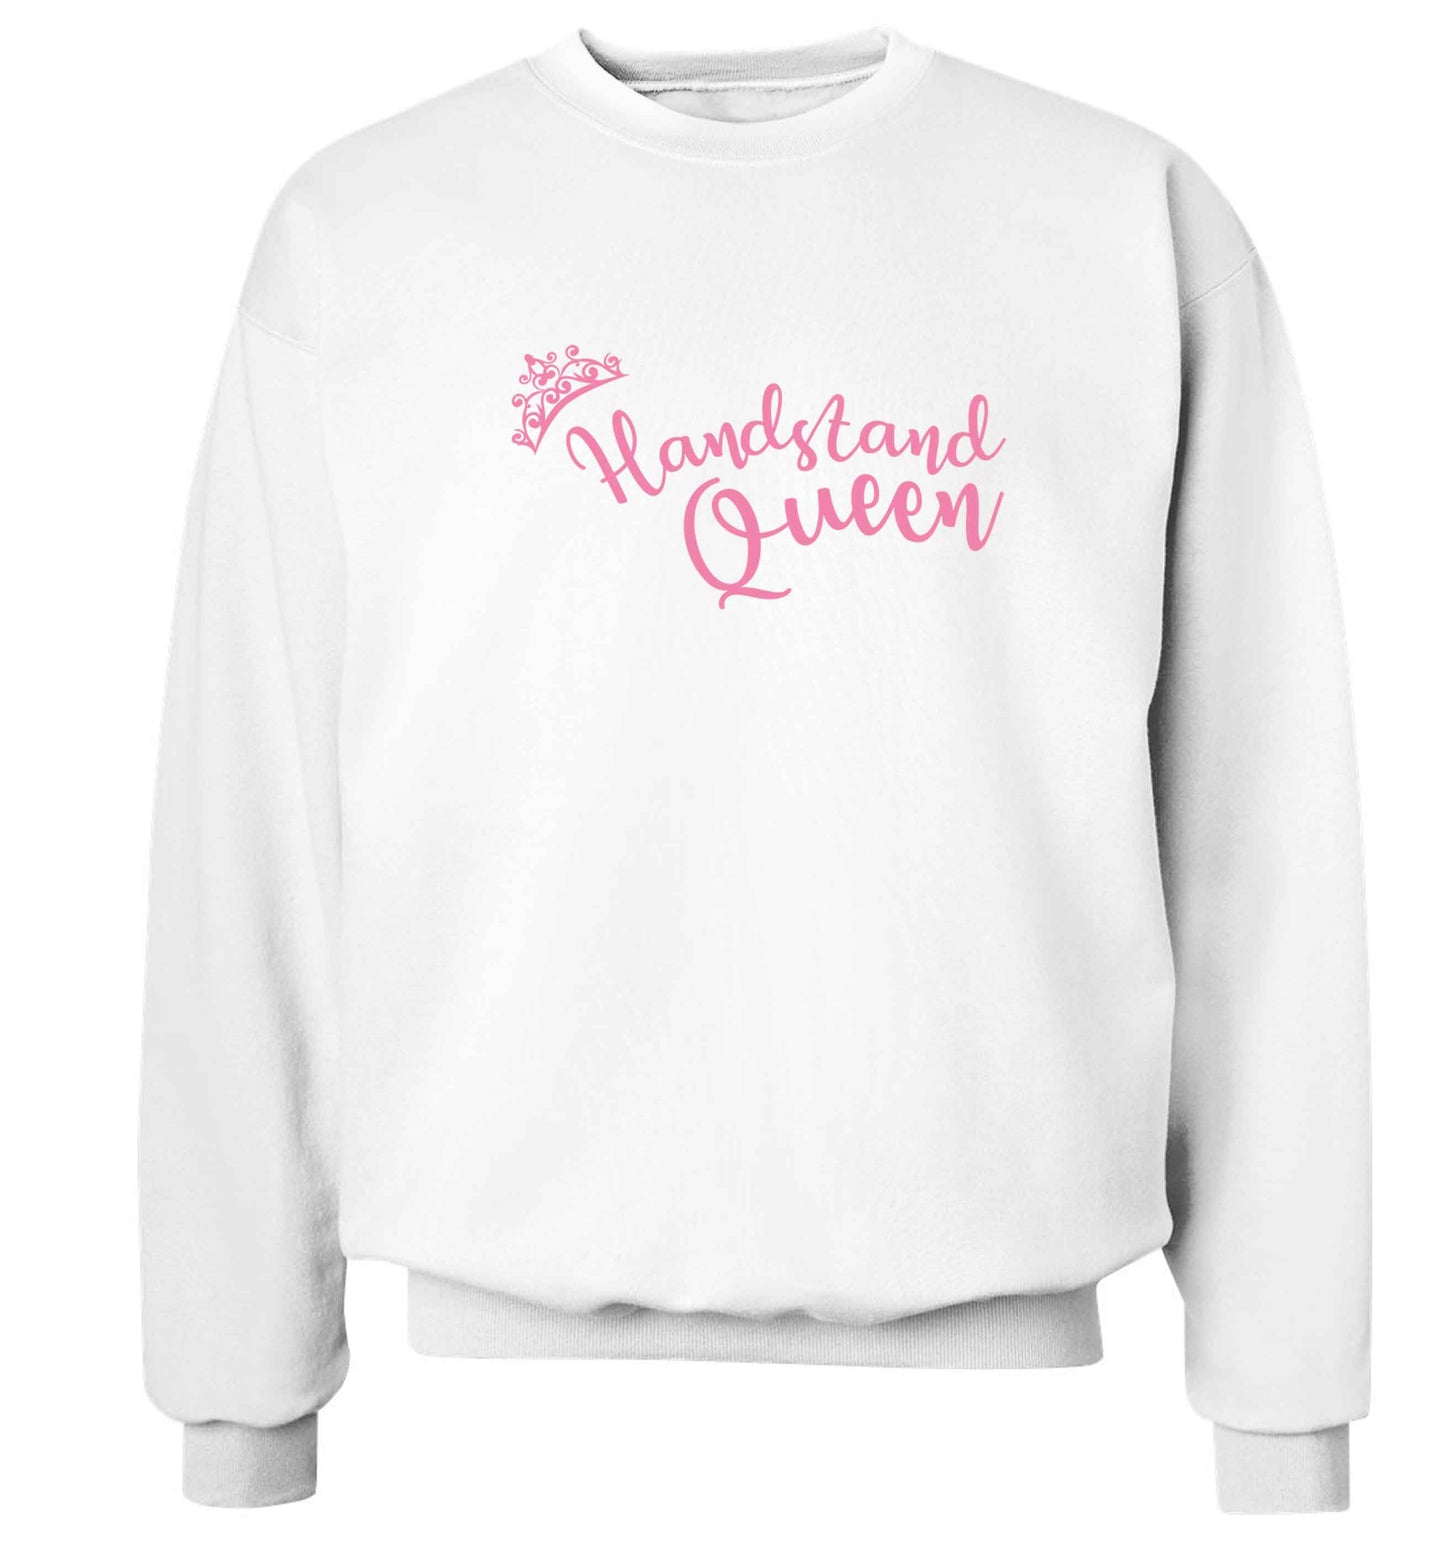 Handstand Queen Adult's unisex white Sweater 2XL